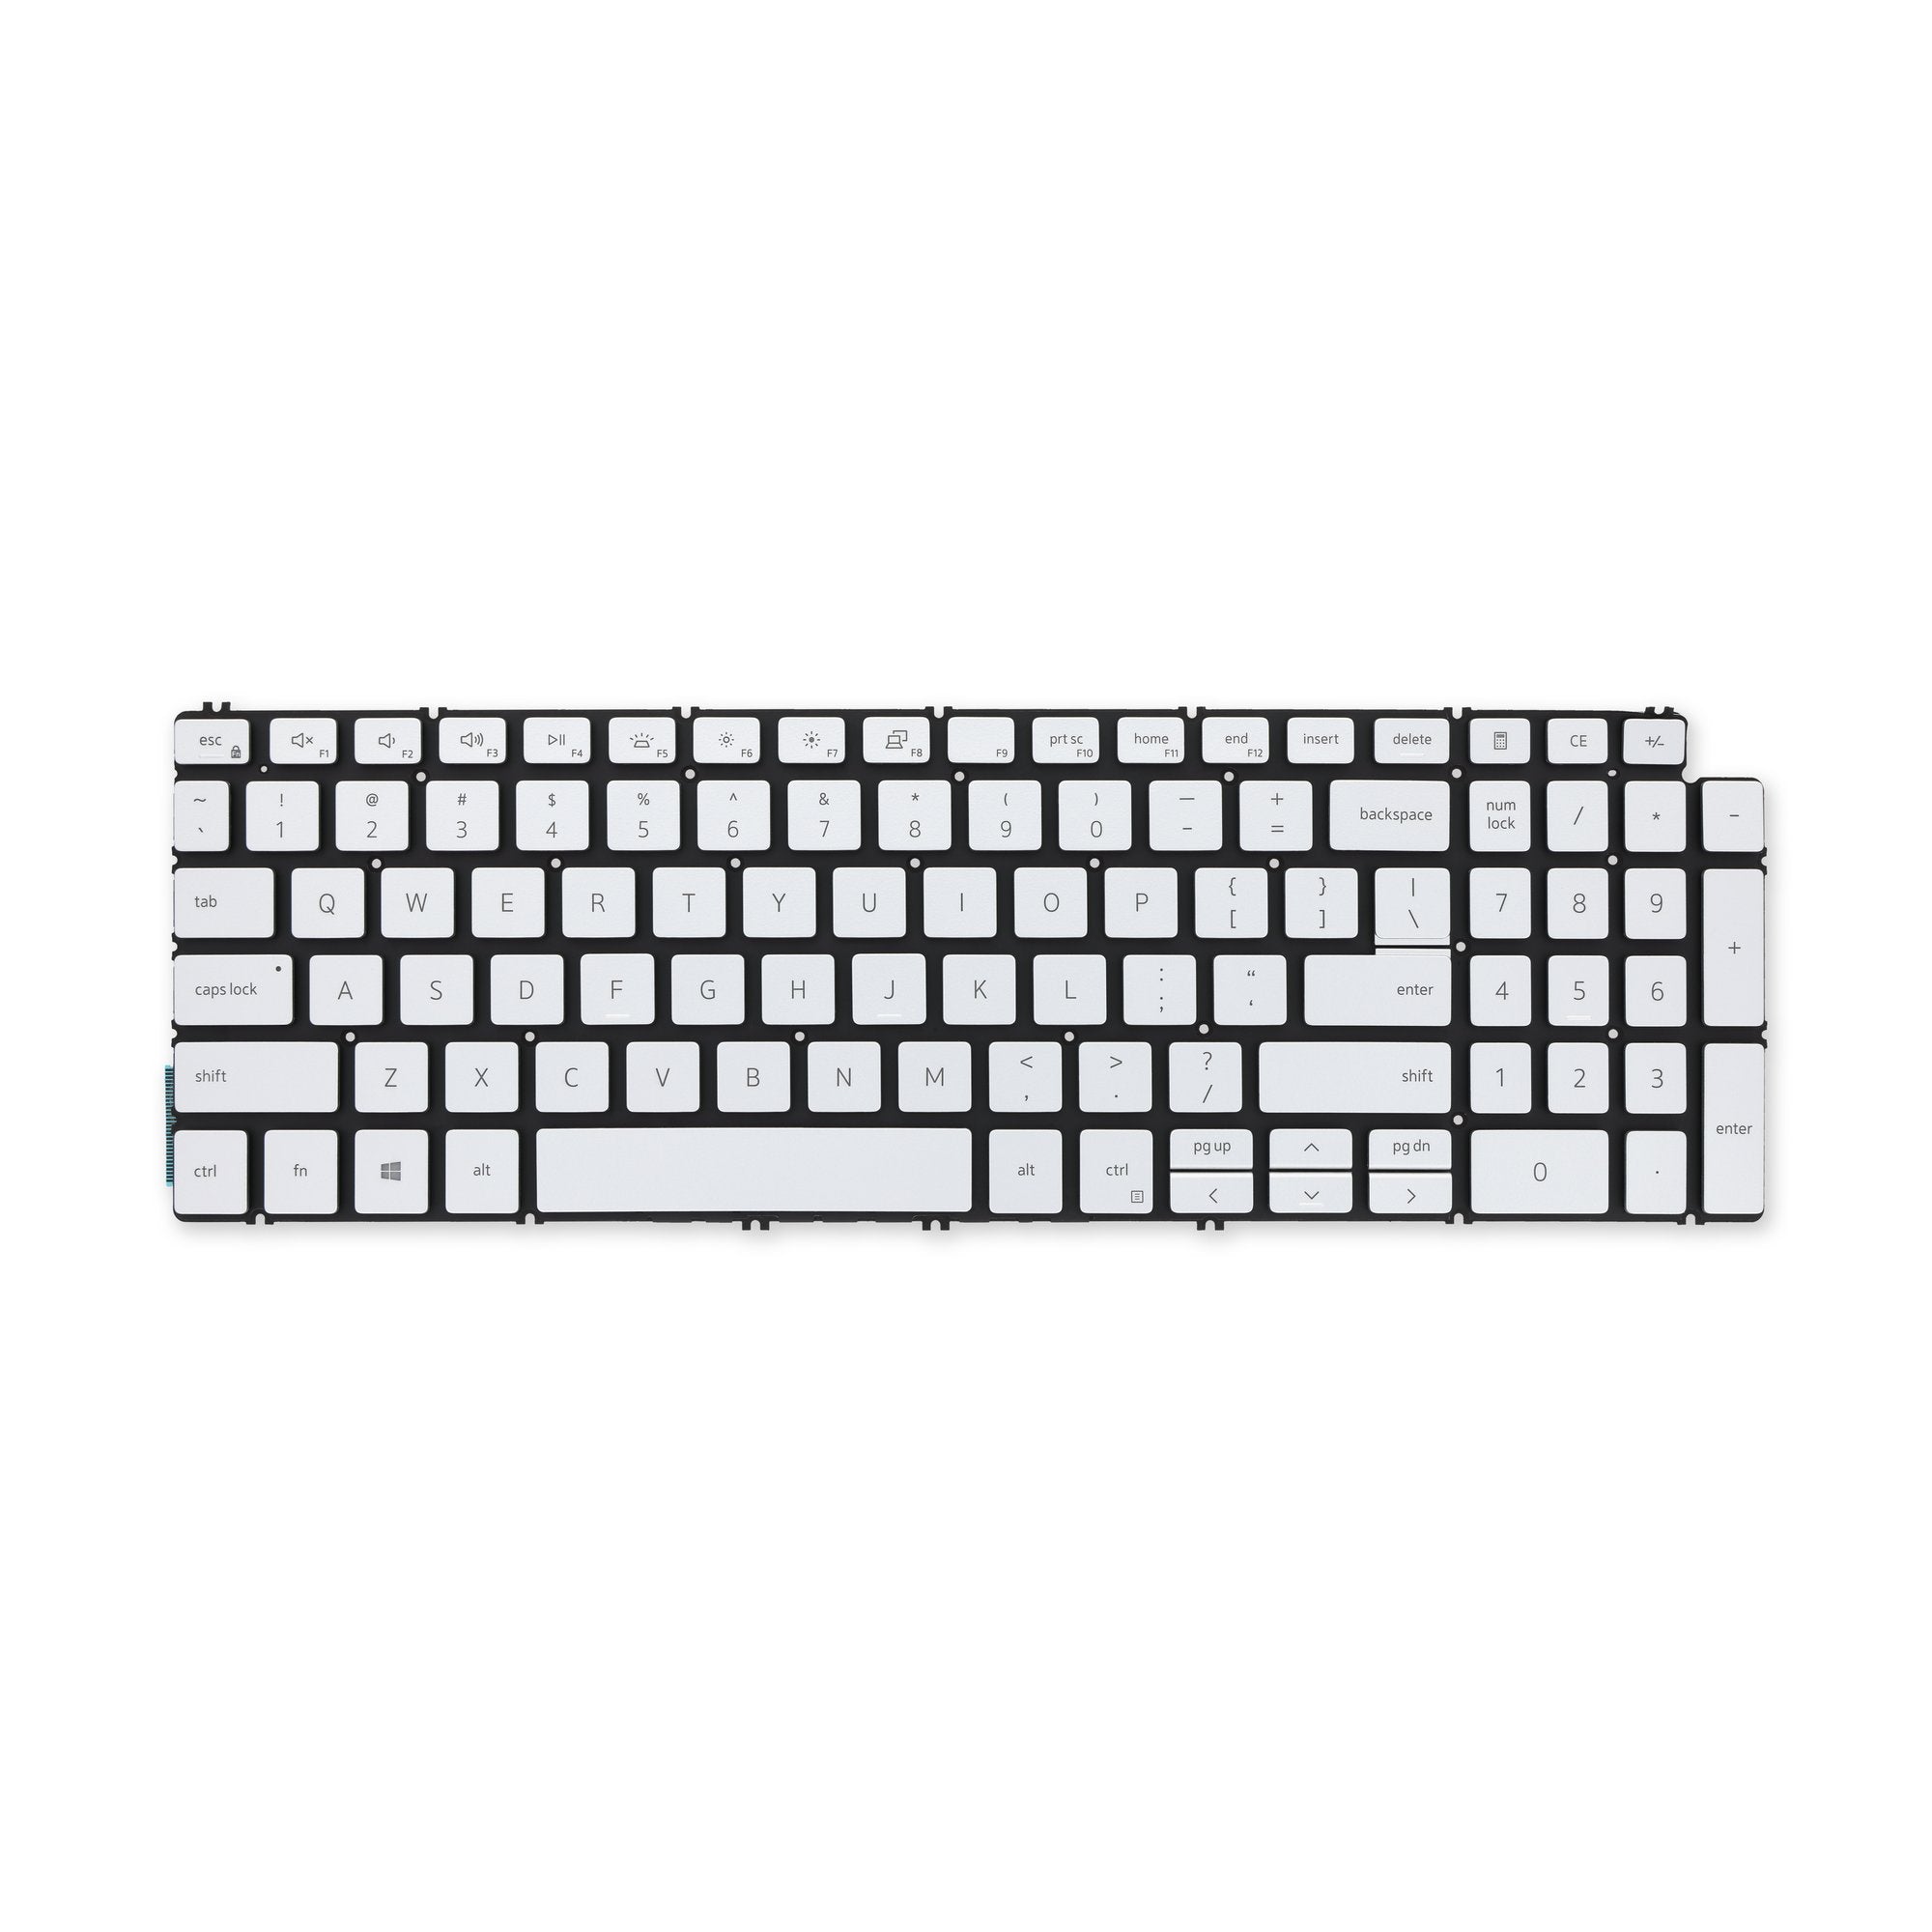 Dell Inspiron Keyboard - GMXMJ New